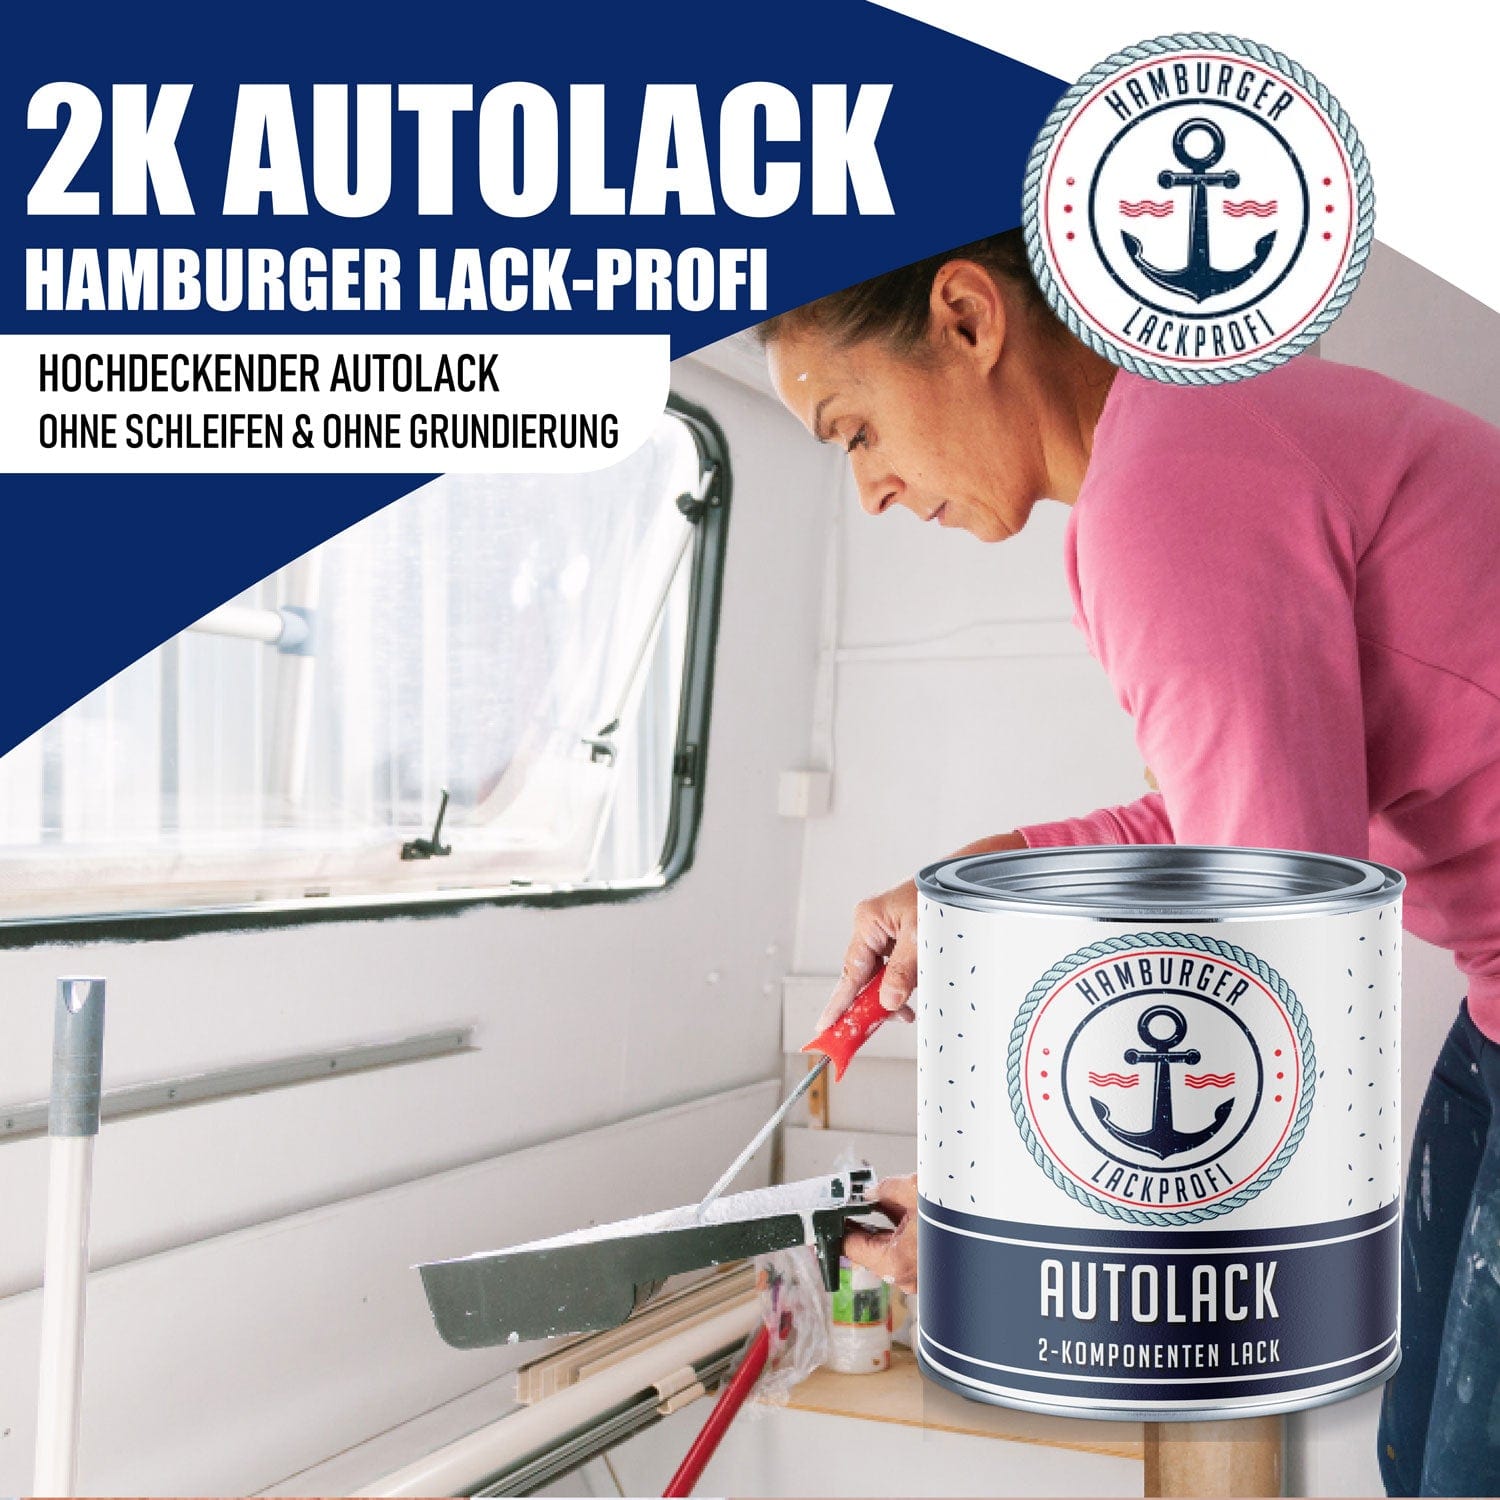 Hamburger Lack-Profi Lacke & Beschichtungen Hamburger Lack-Profi 2K Autolack in Kobaltblau RAL 5013 mit Lackierset (X300) & Verdünnung (1 L) - 30% Sparangebot